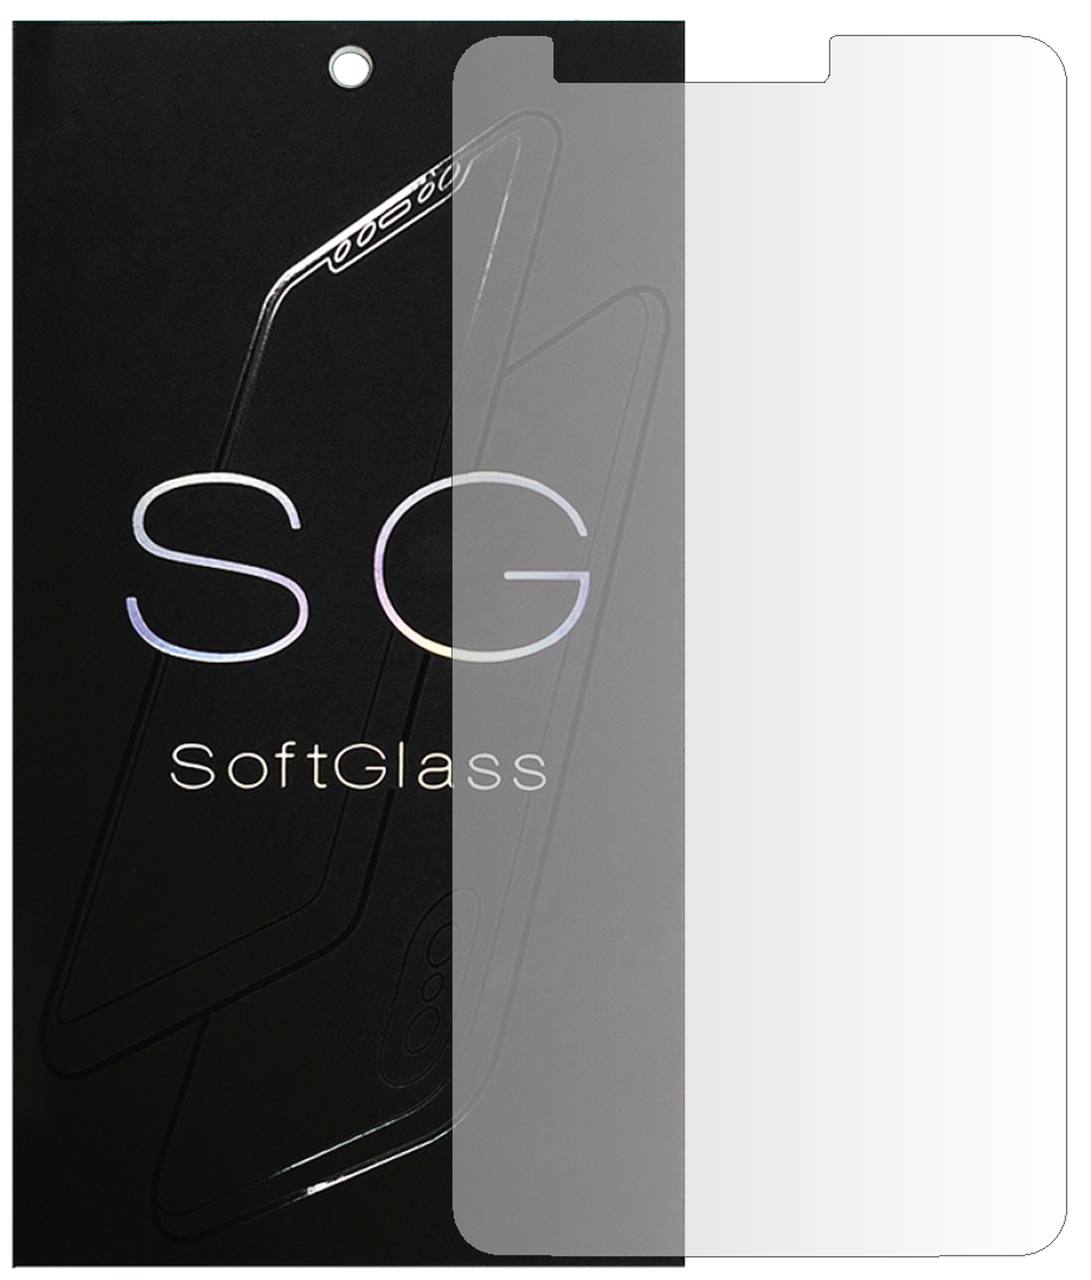 Бронеплівка LG G3S на екран поліуретанова SoftGlass